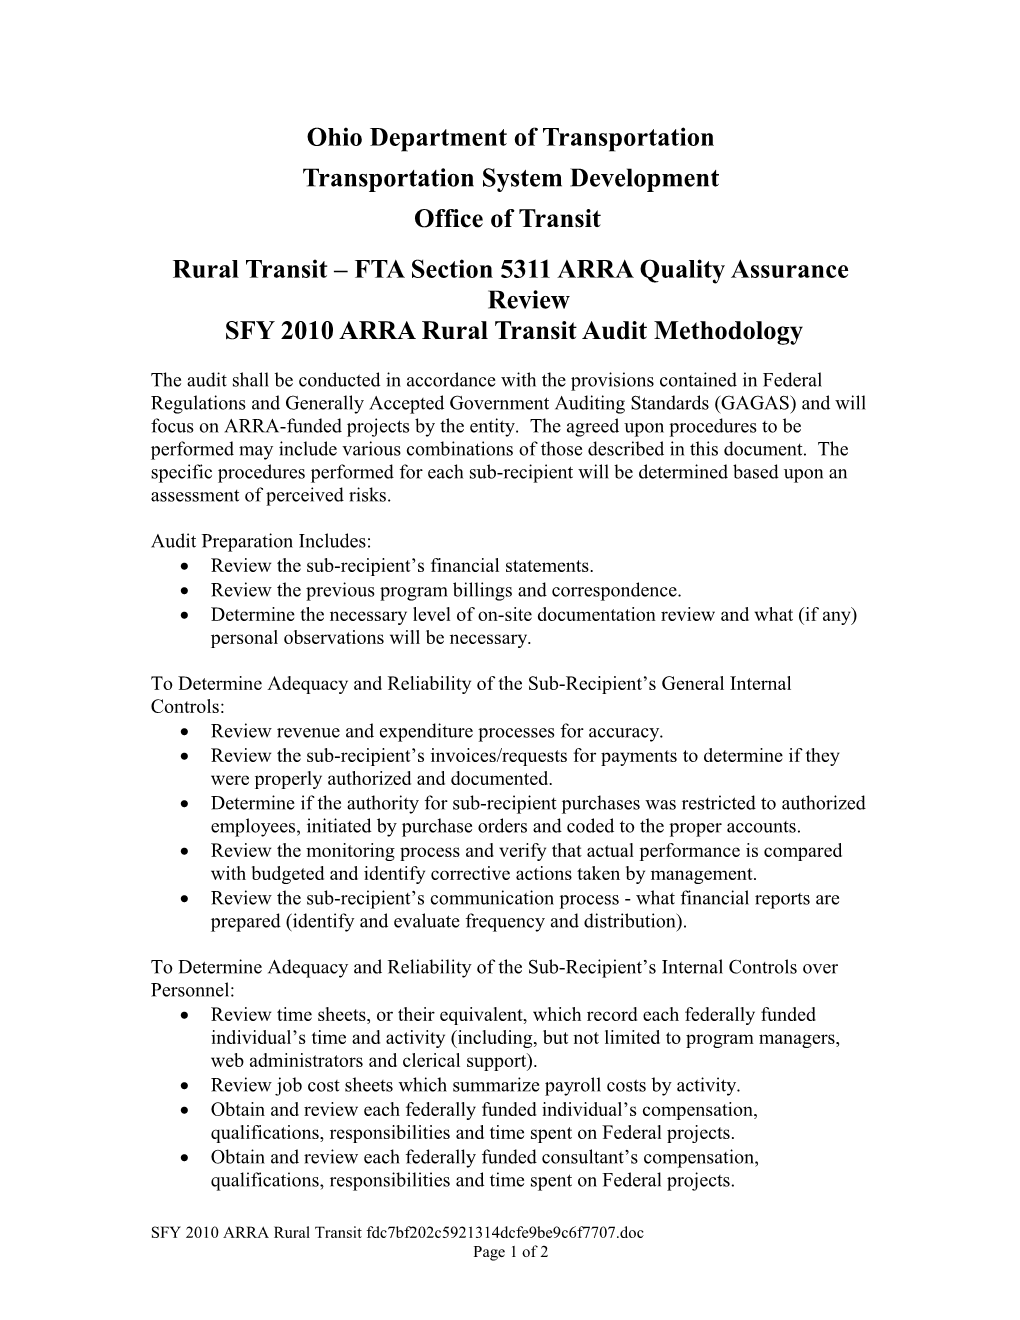 Rural Transit FTA Section 5311 ARRA Quality Assurance Review